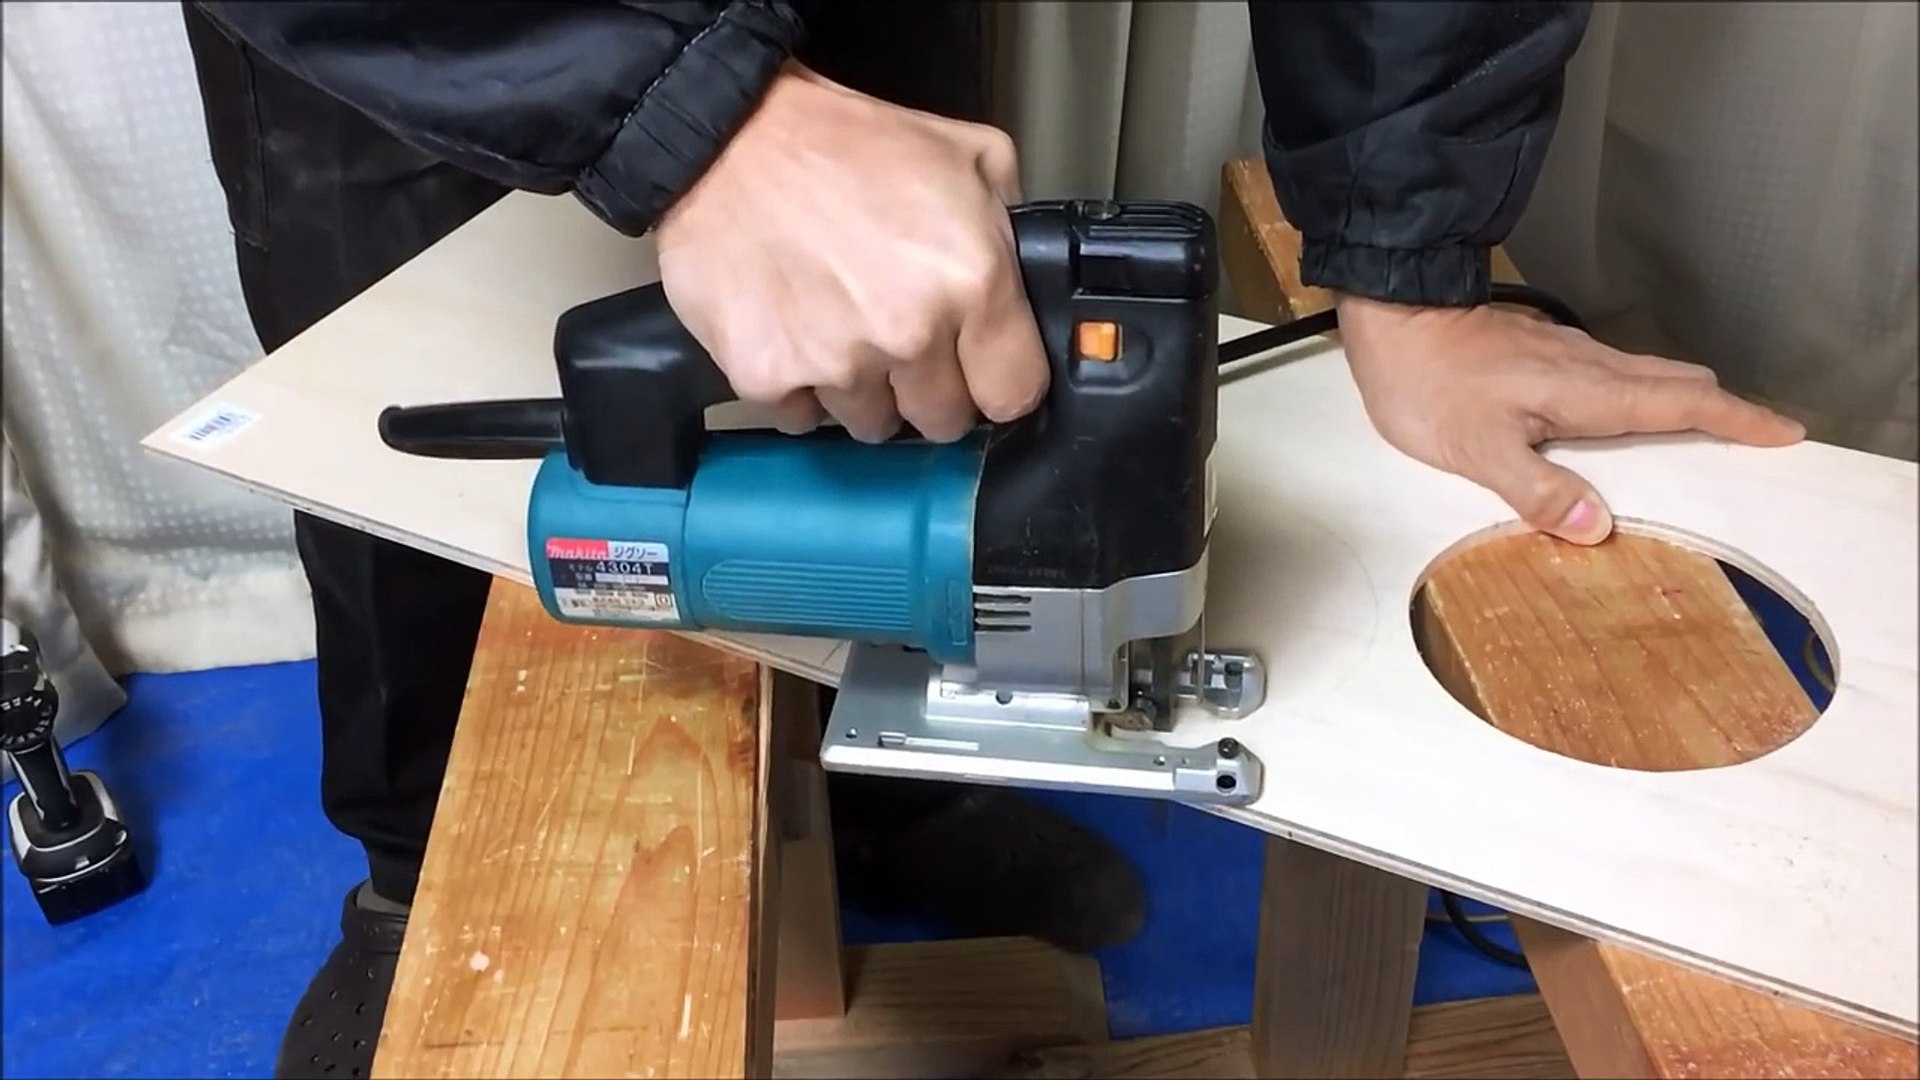 Diy工具 ジグソーで丸く切る 四角く切る ジグソーの基本的な使い方 カミヤ木工のdiy家具教室 Video Dailymotion